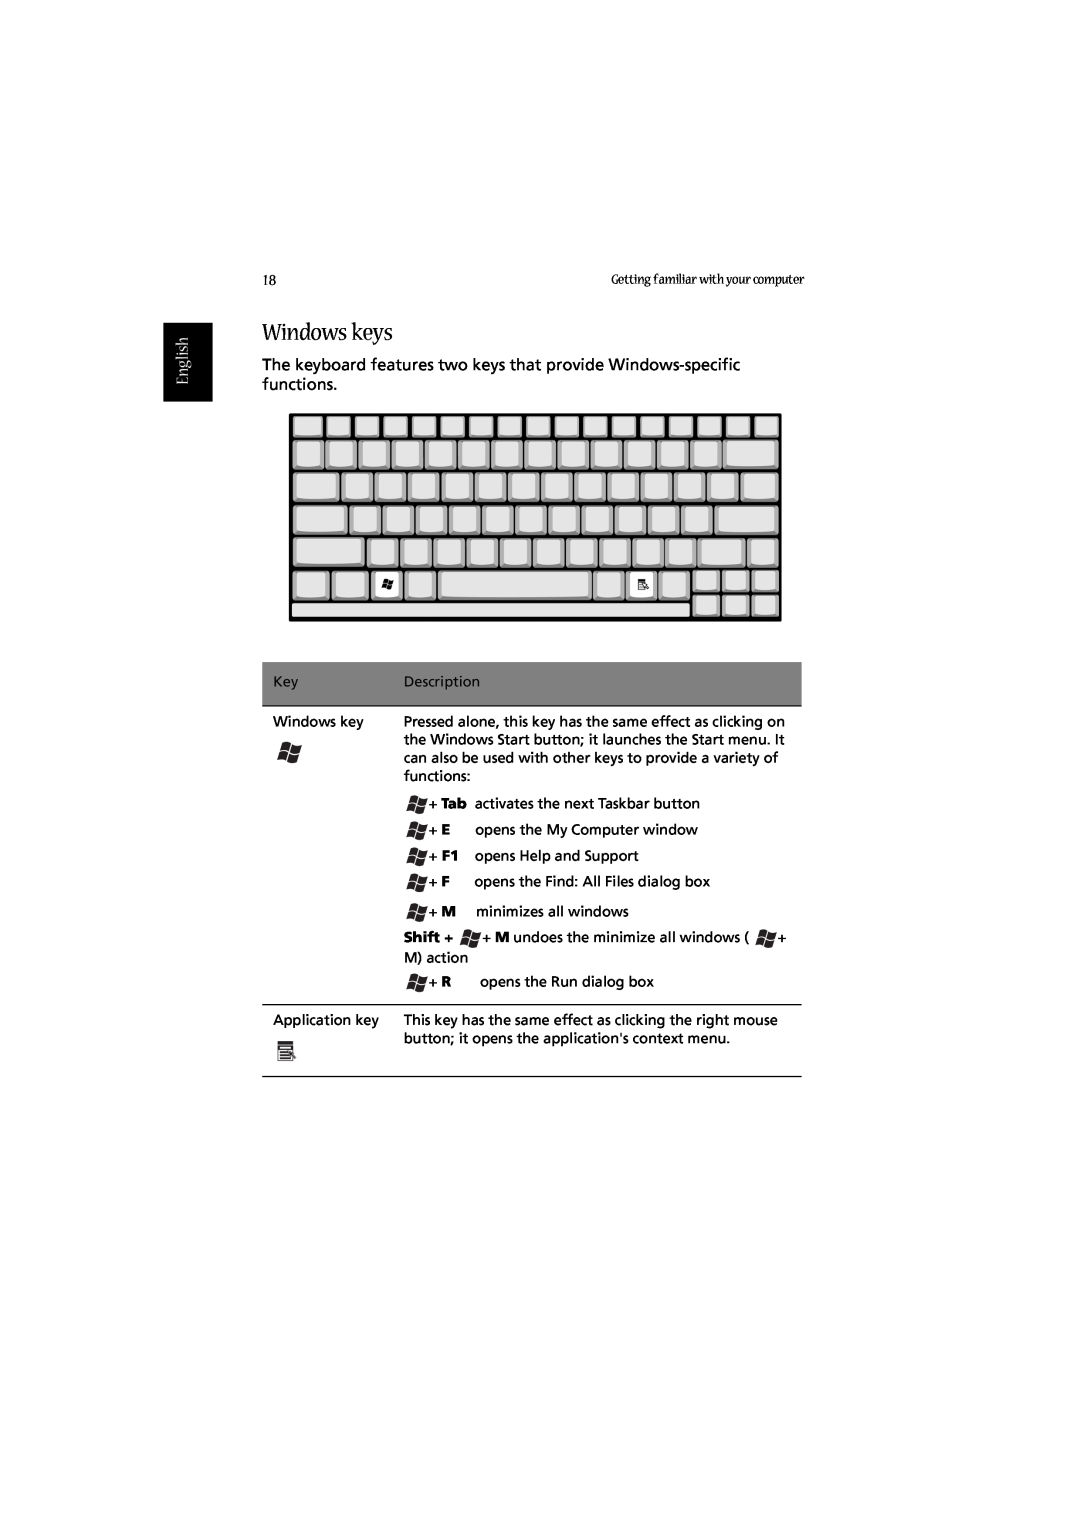 Acer 2010 manual Windows keys, English, Shift + 